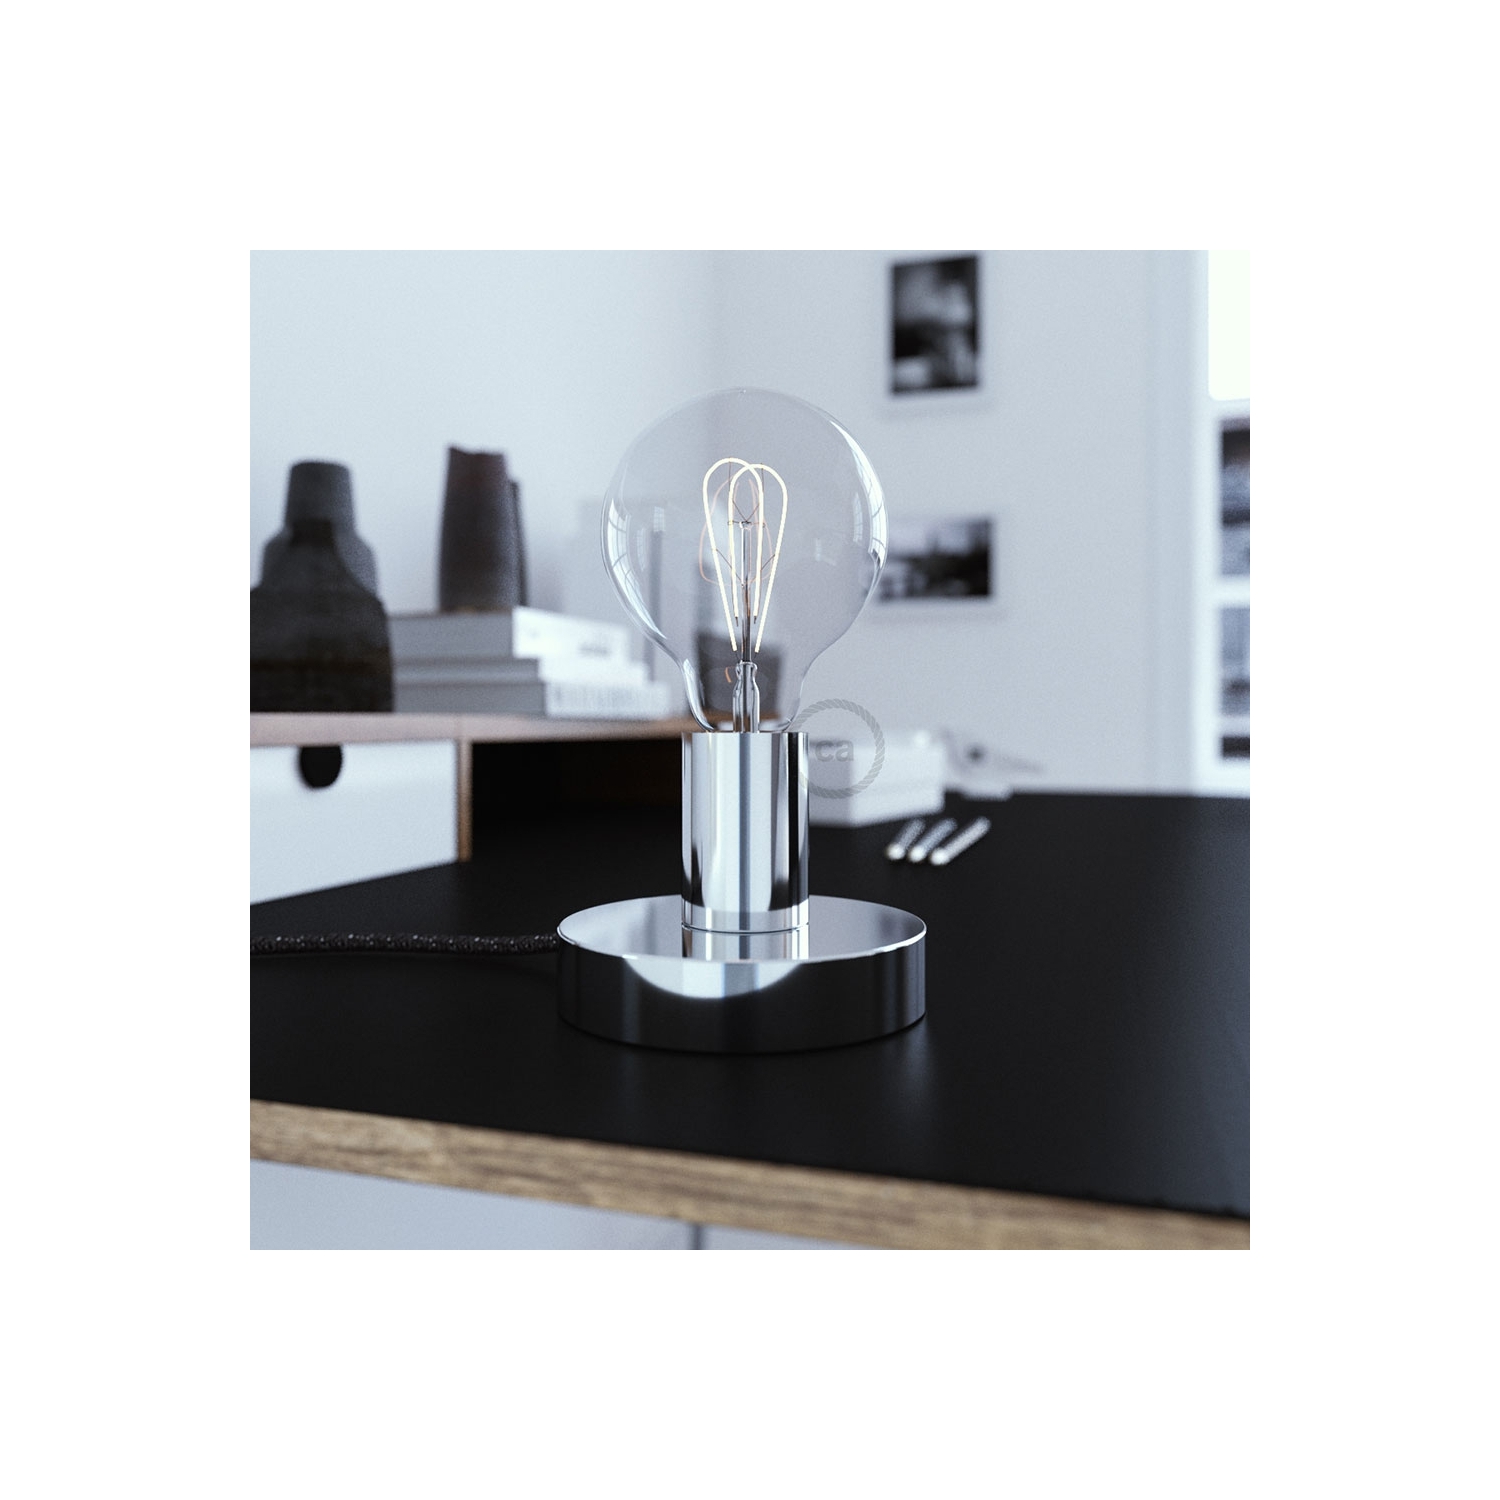 The Posaluce | Chrome Metal Table Lamp